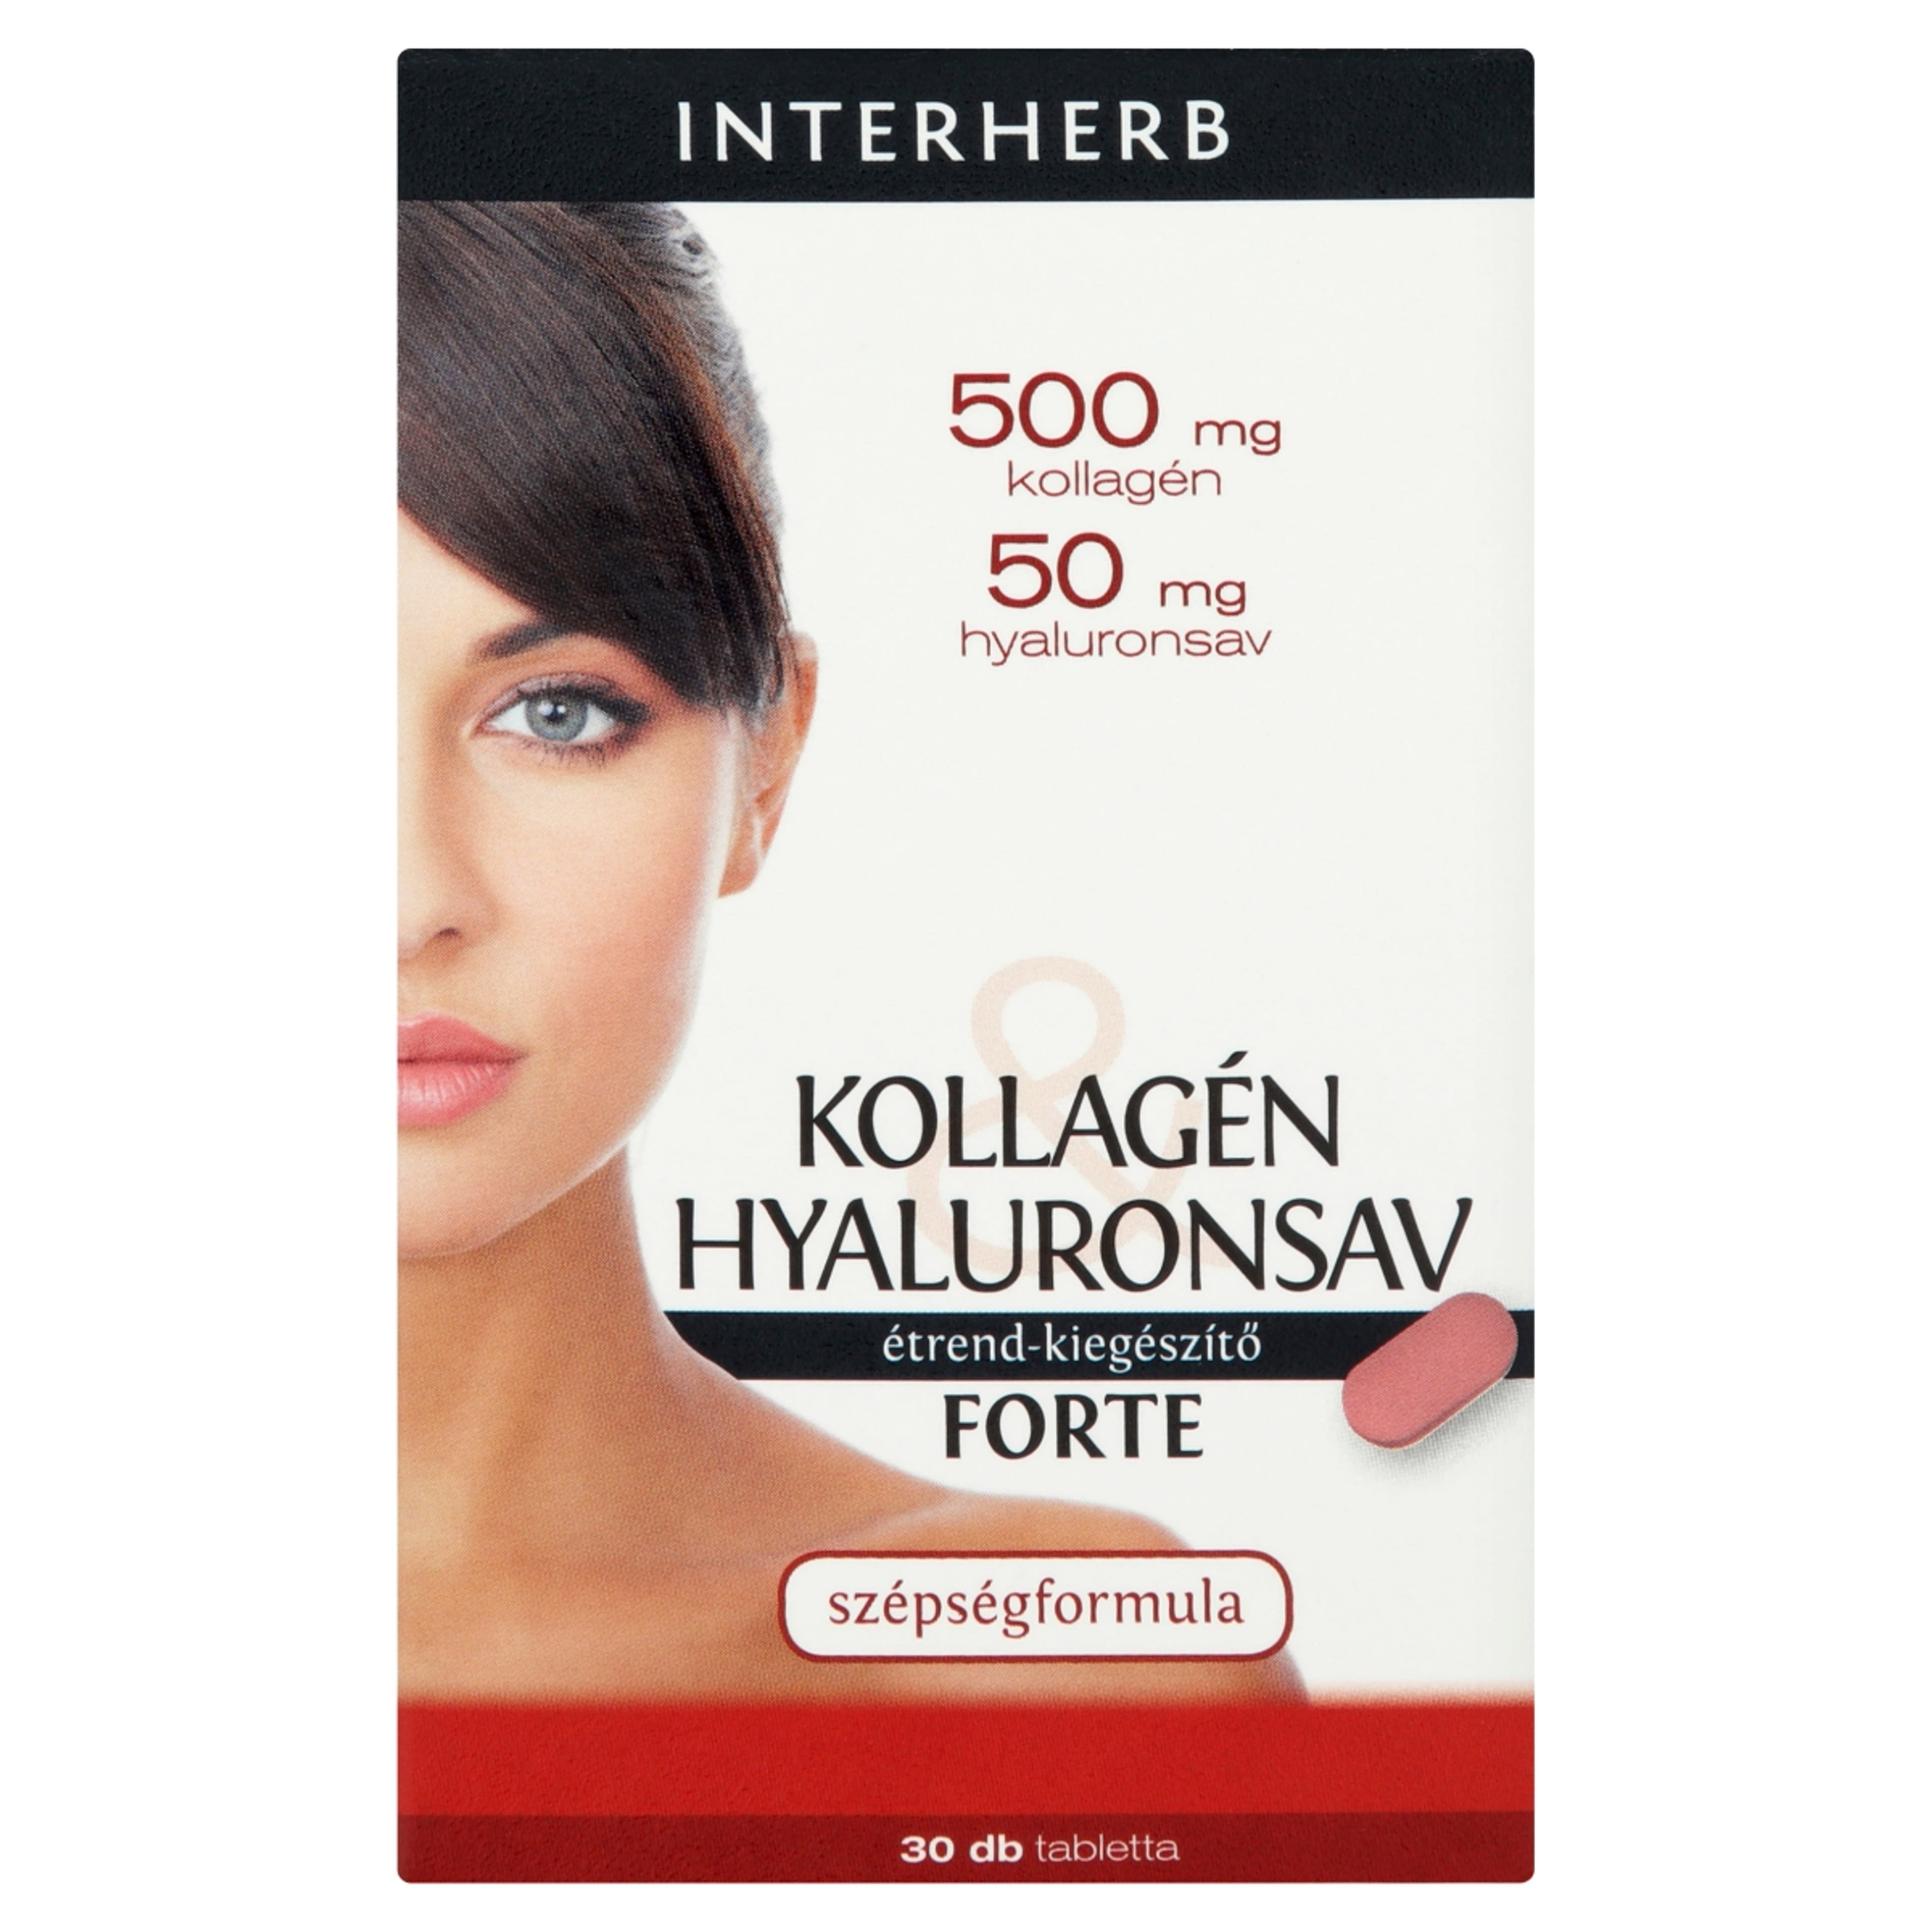 Interherb Kollagén És Hyaluronsav Forte Tabletta - 30 db